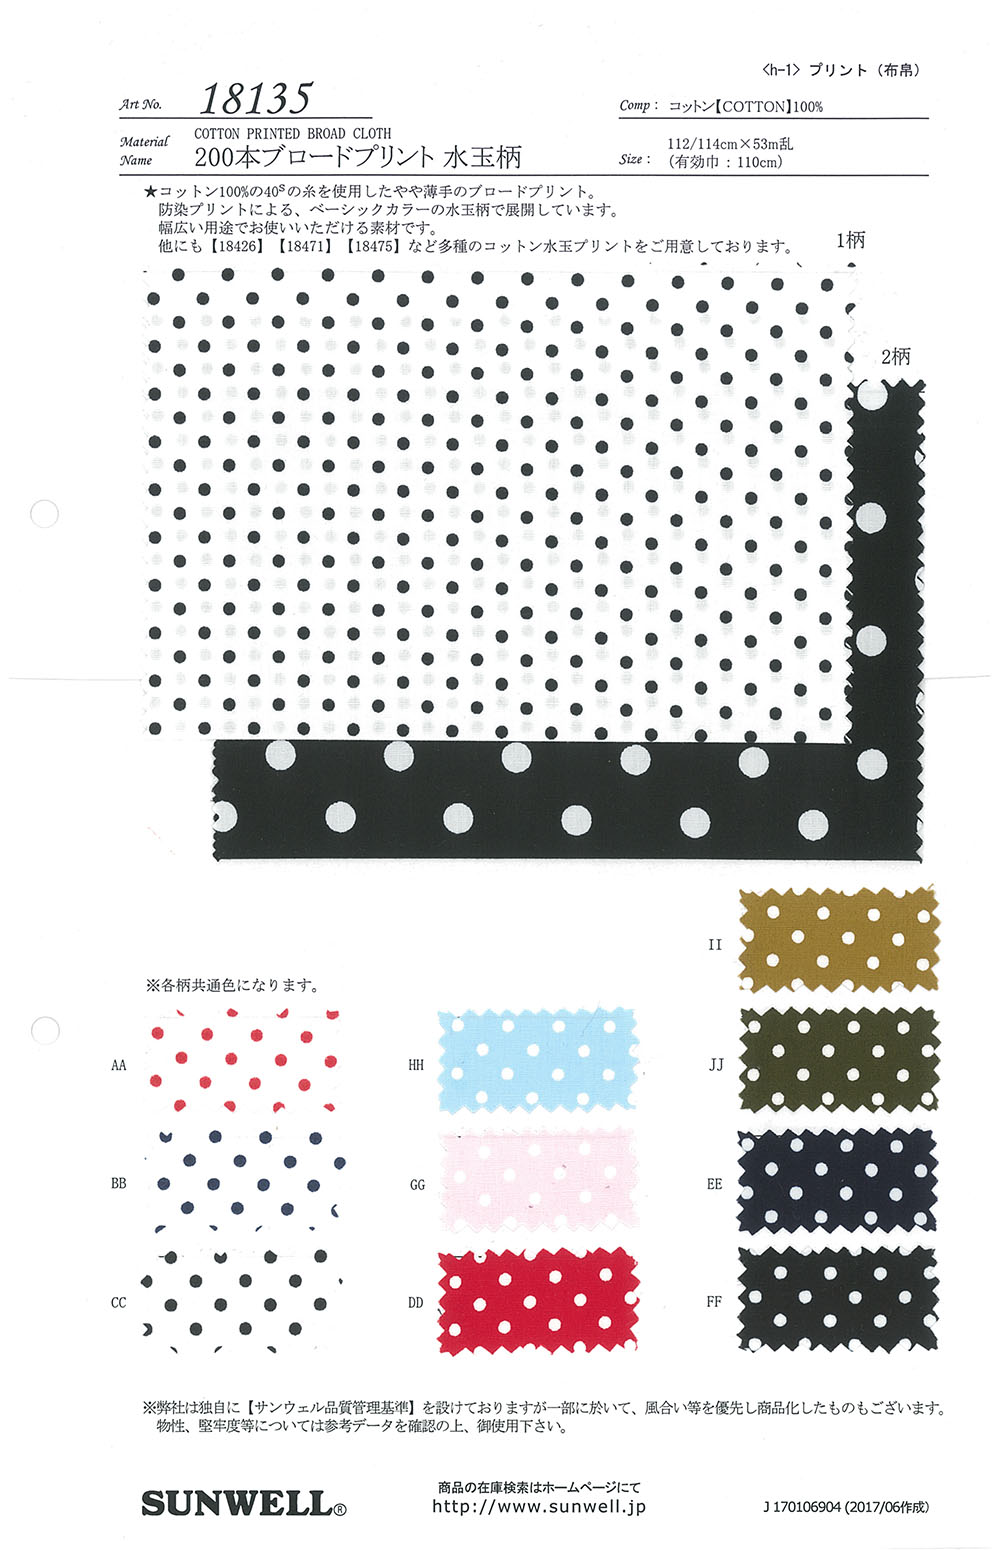 18135 200 Broadcloth Print Polka Dots[Textile / Fabric] SUNWELL